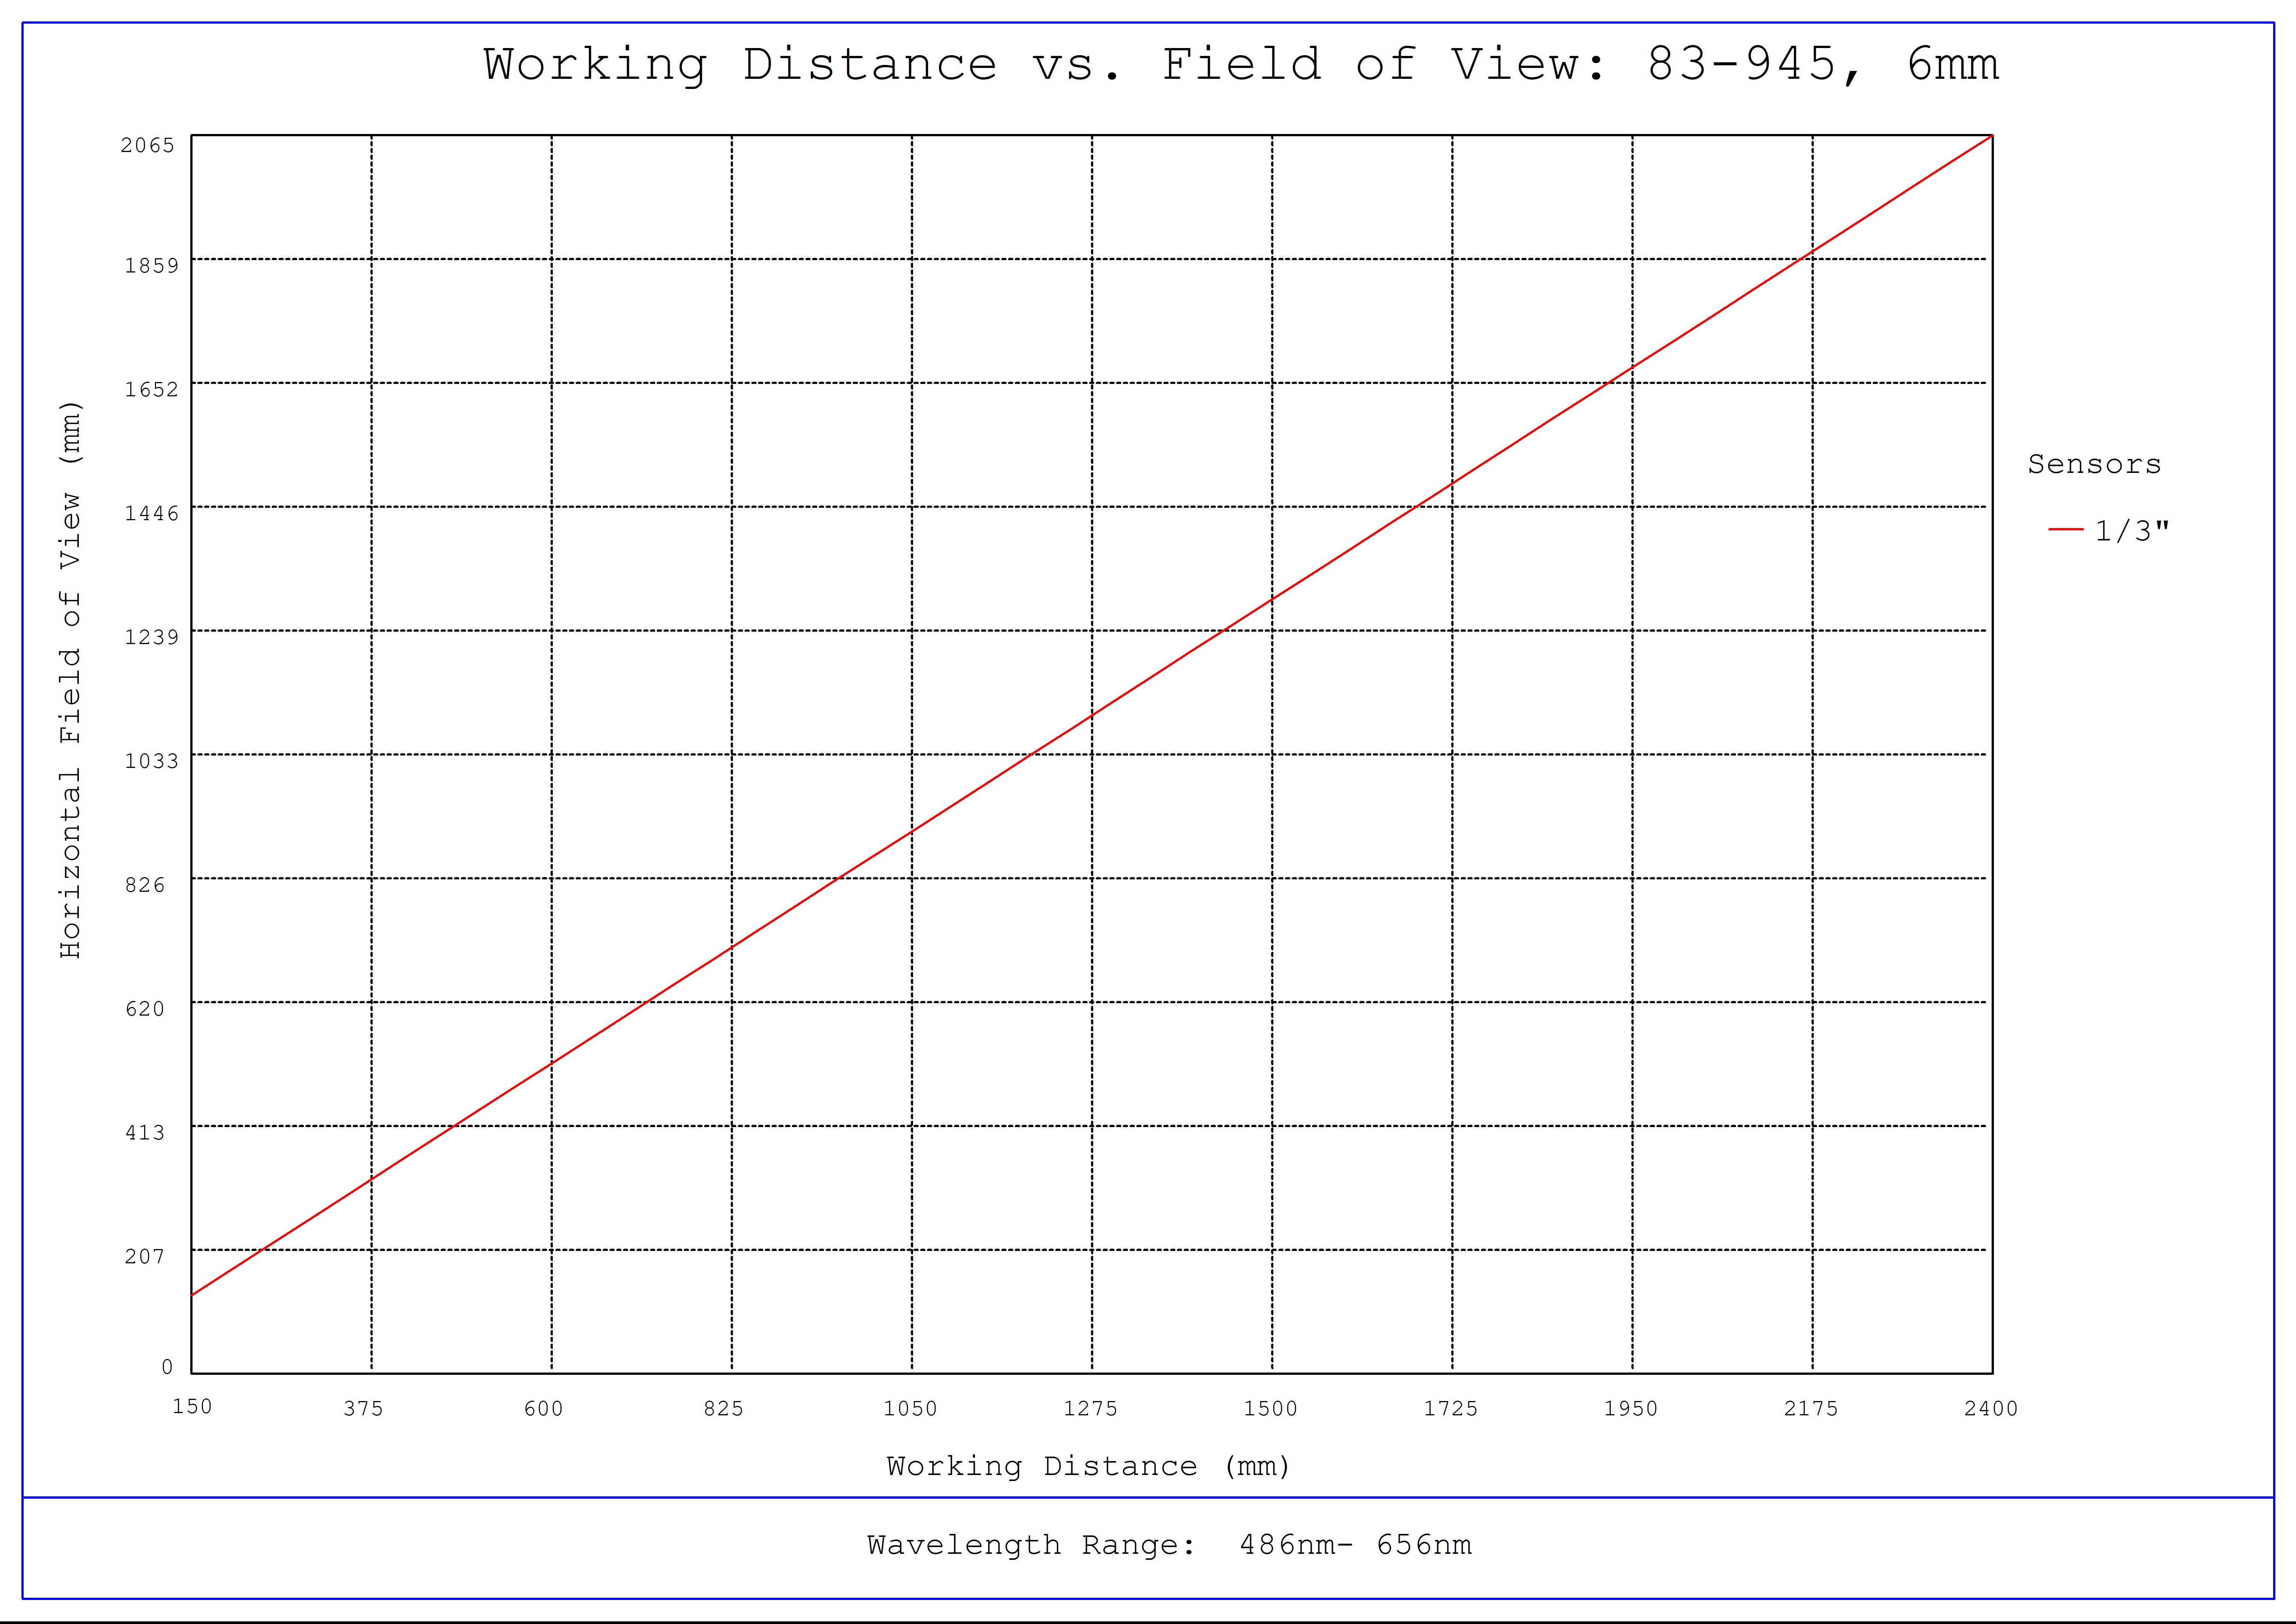 #83-945, f/8, 6mm Focal Length Green Series M12 Lens, Working Distance versus Field of View Plot